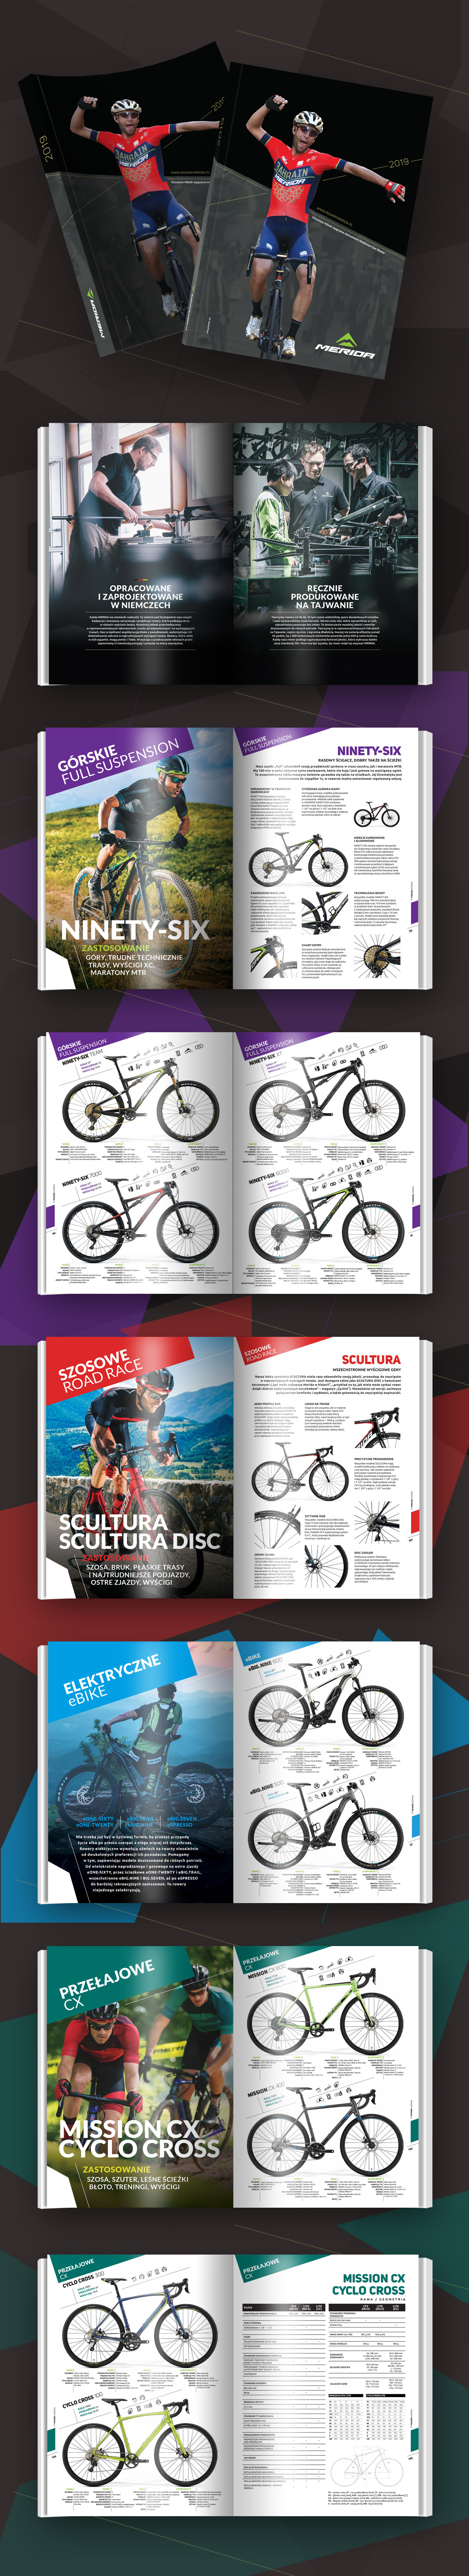 product bikes rowery katalogue visual identity